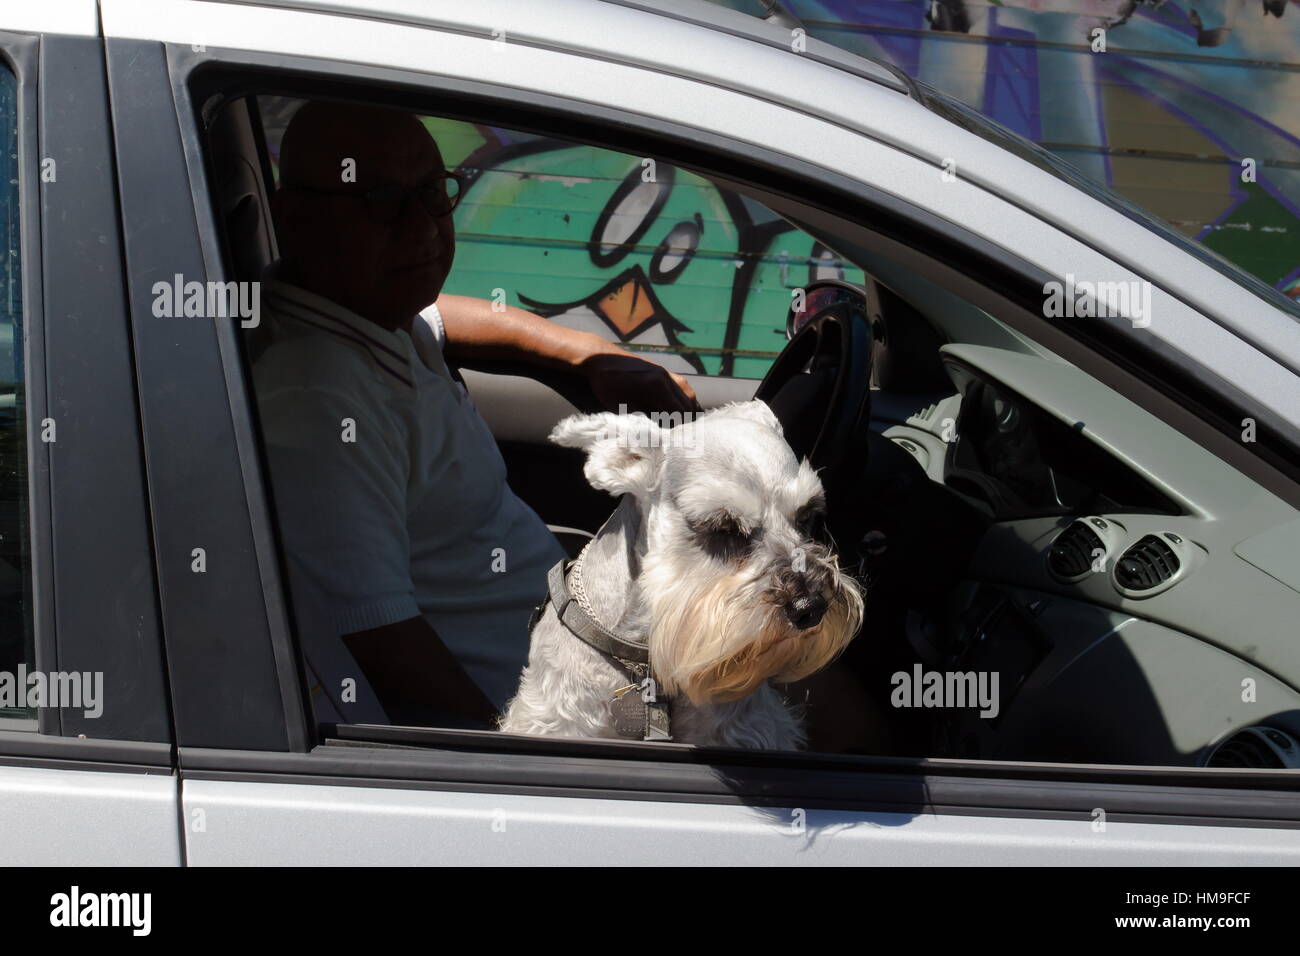 Dog at car window, Toronto Stock Photo